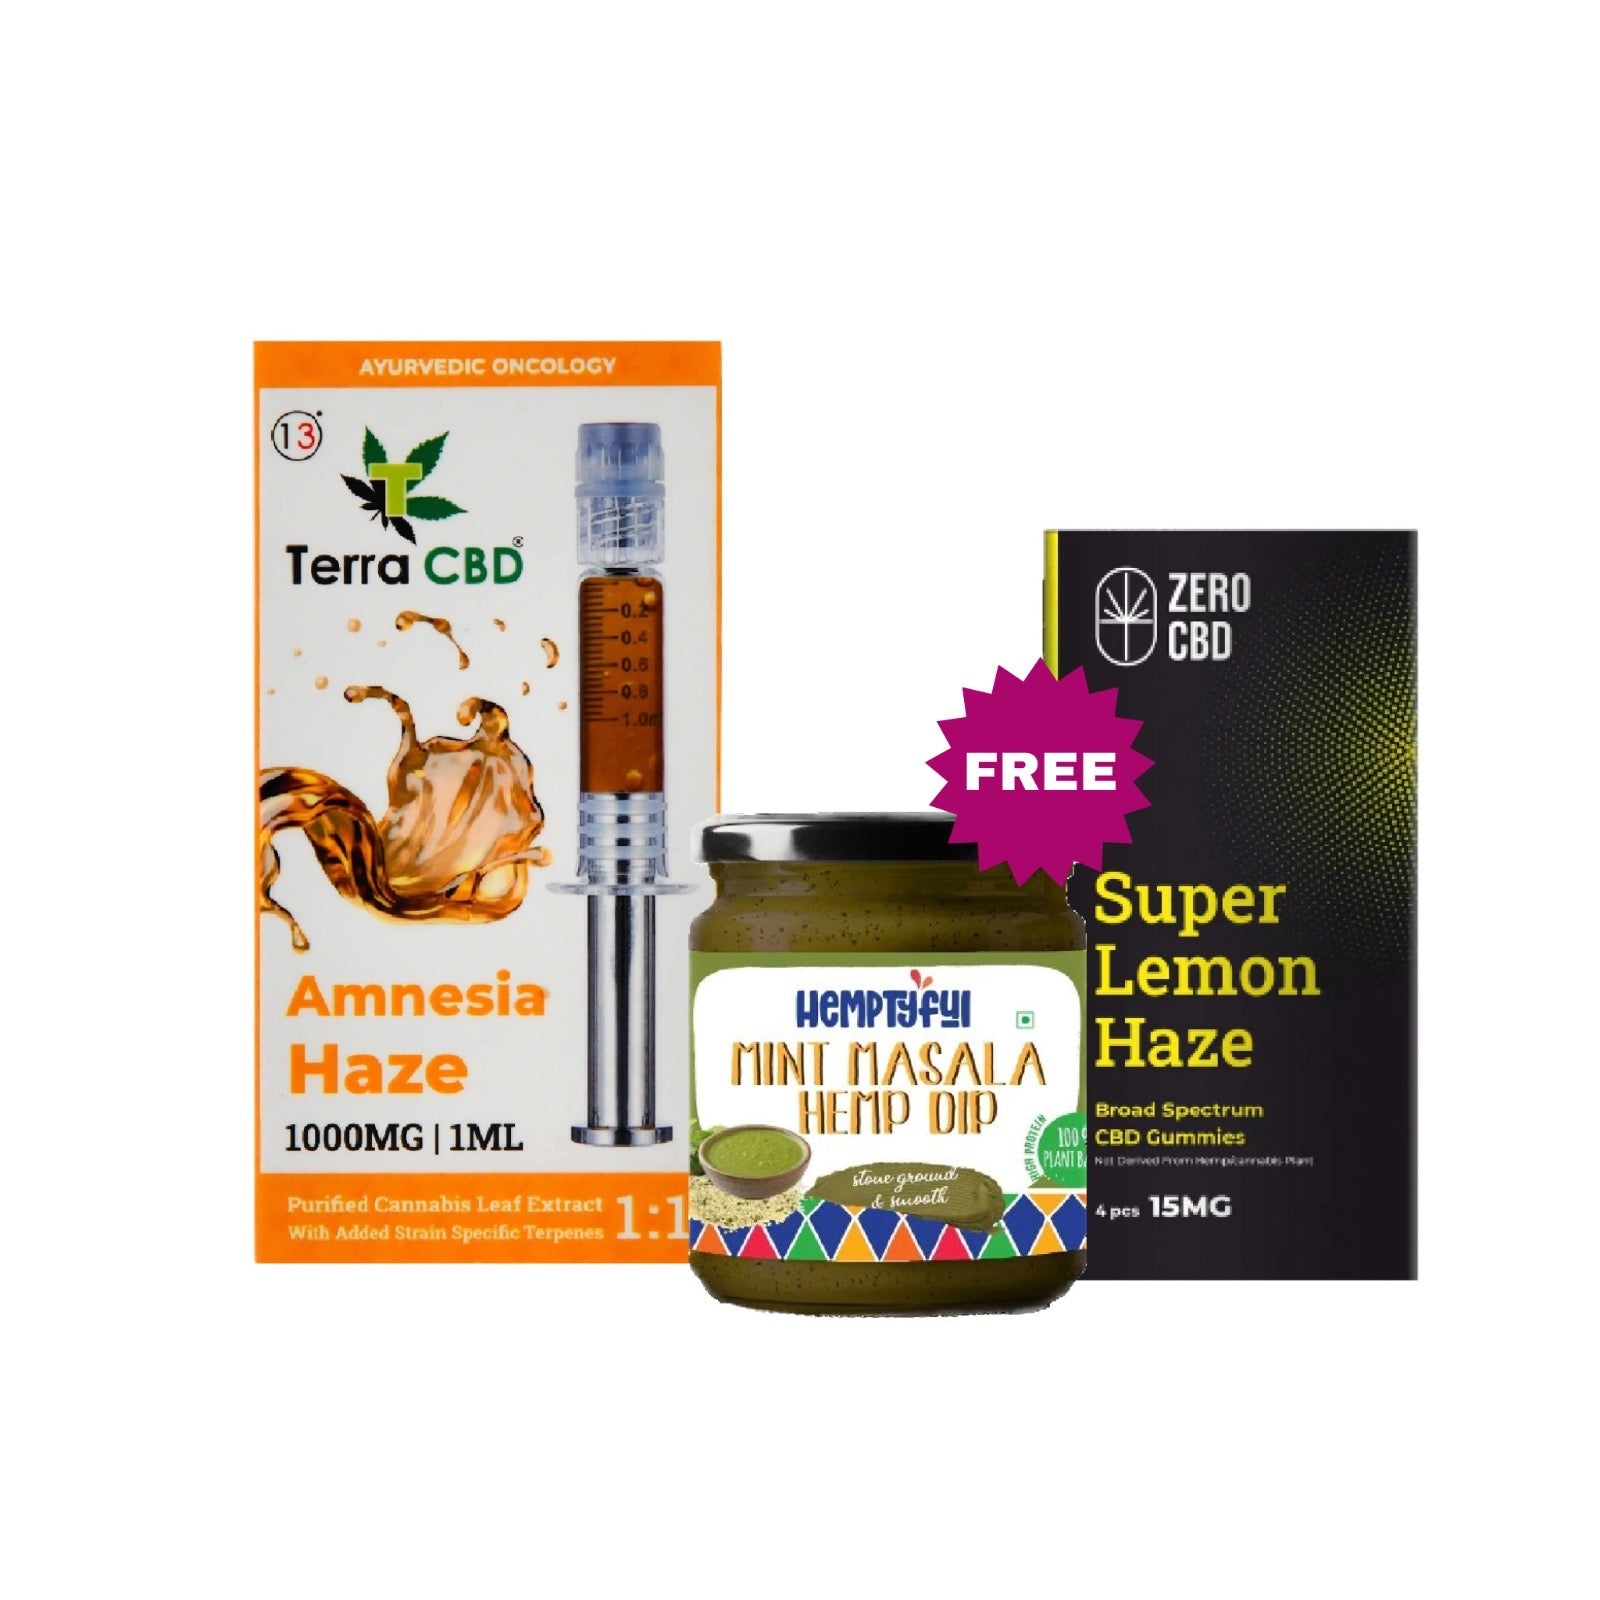 Special Offer - Free Hemp spread and CBD Gummies with Amnesia Haze Cannabis Extract - CBD Store India